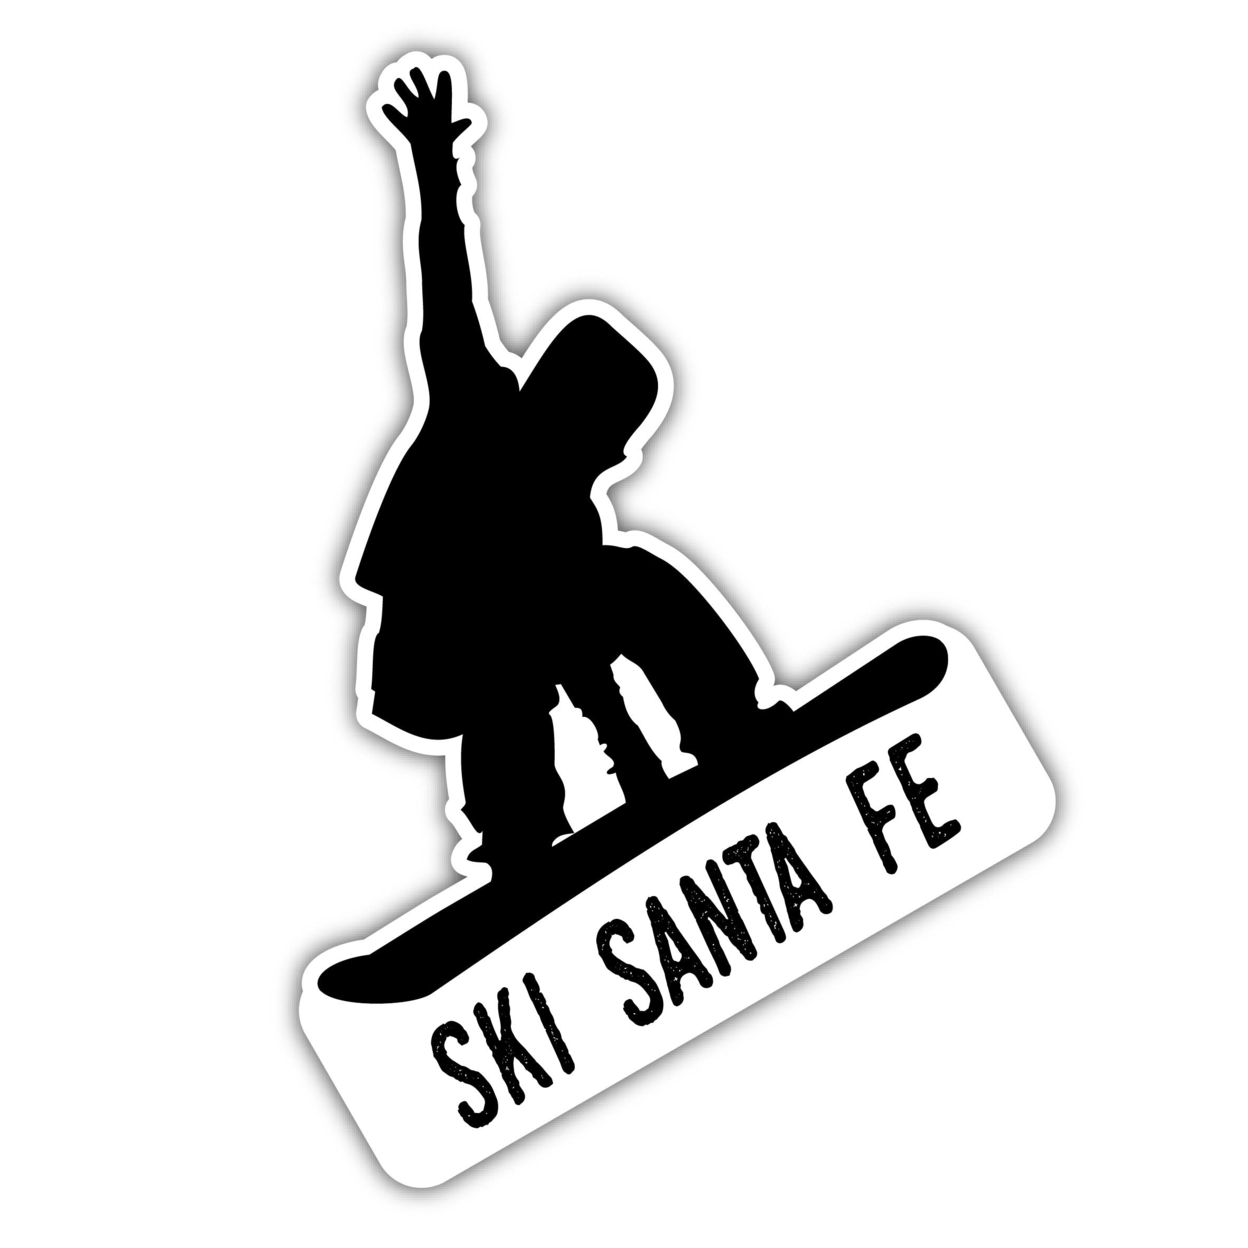 Ski Santa Fe New Mexico Ski Adventures Souvenir Approximately 5 X 2.5-Inch Vinyl Decal Sticker Goggle Design